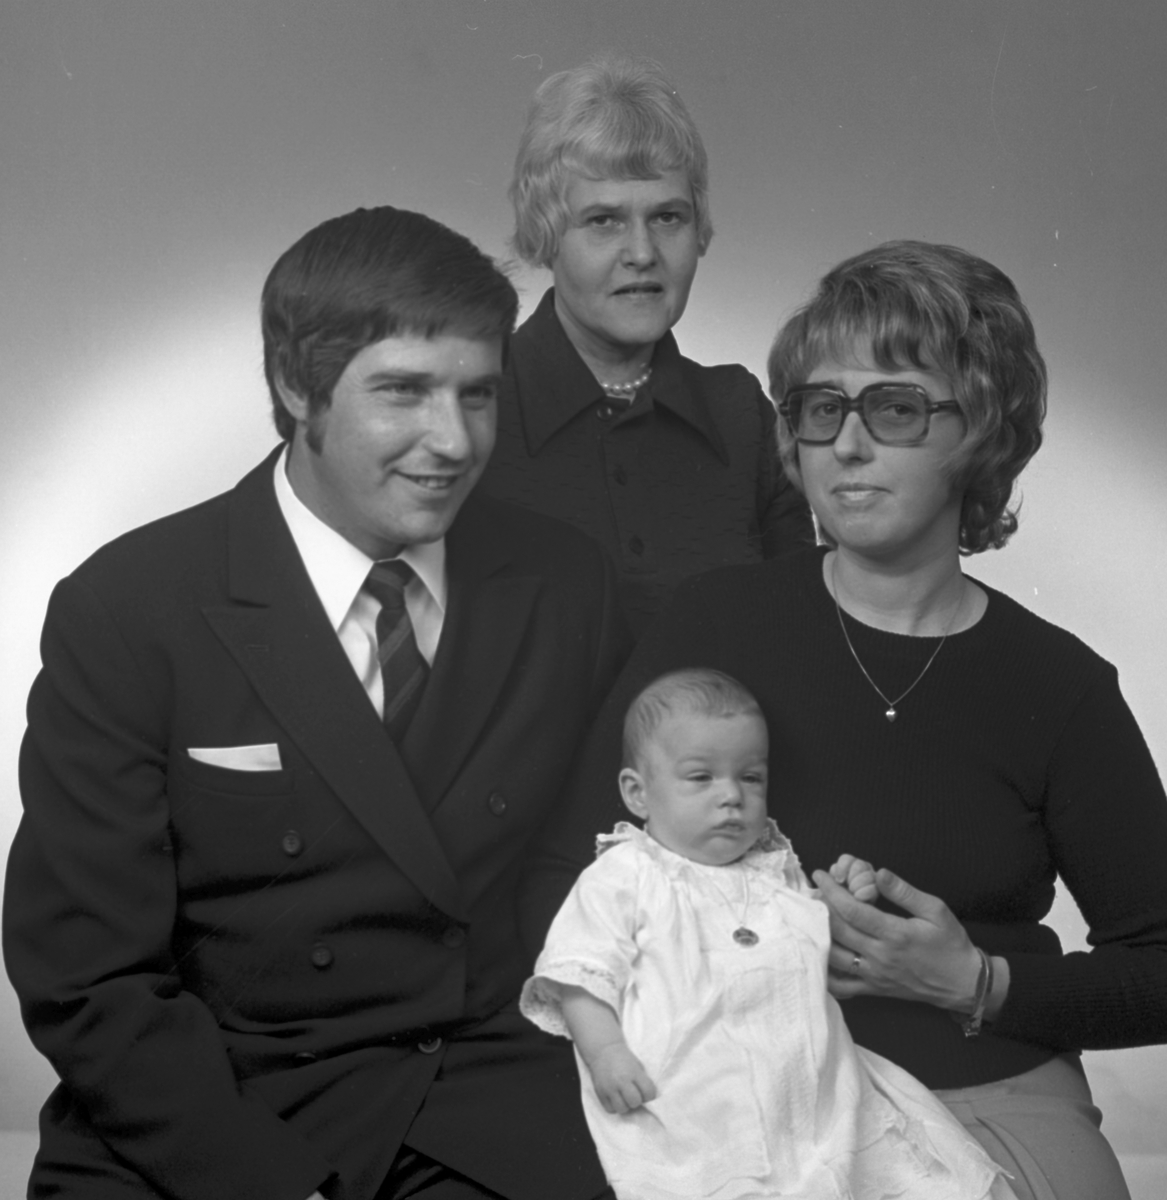 Familjen Olsson, Norra Köpmangatan 30 b, Gävle. Den 27 maj 1973
